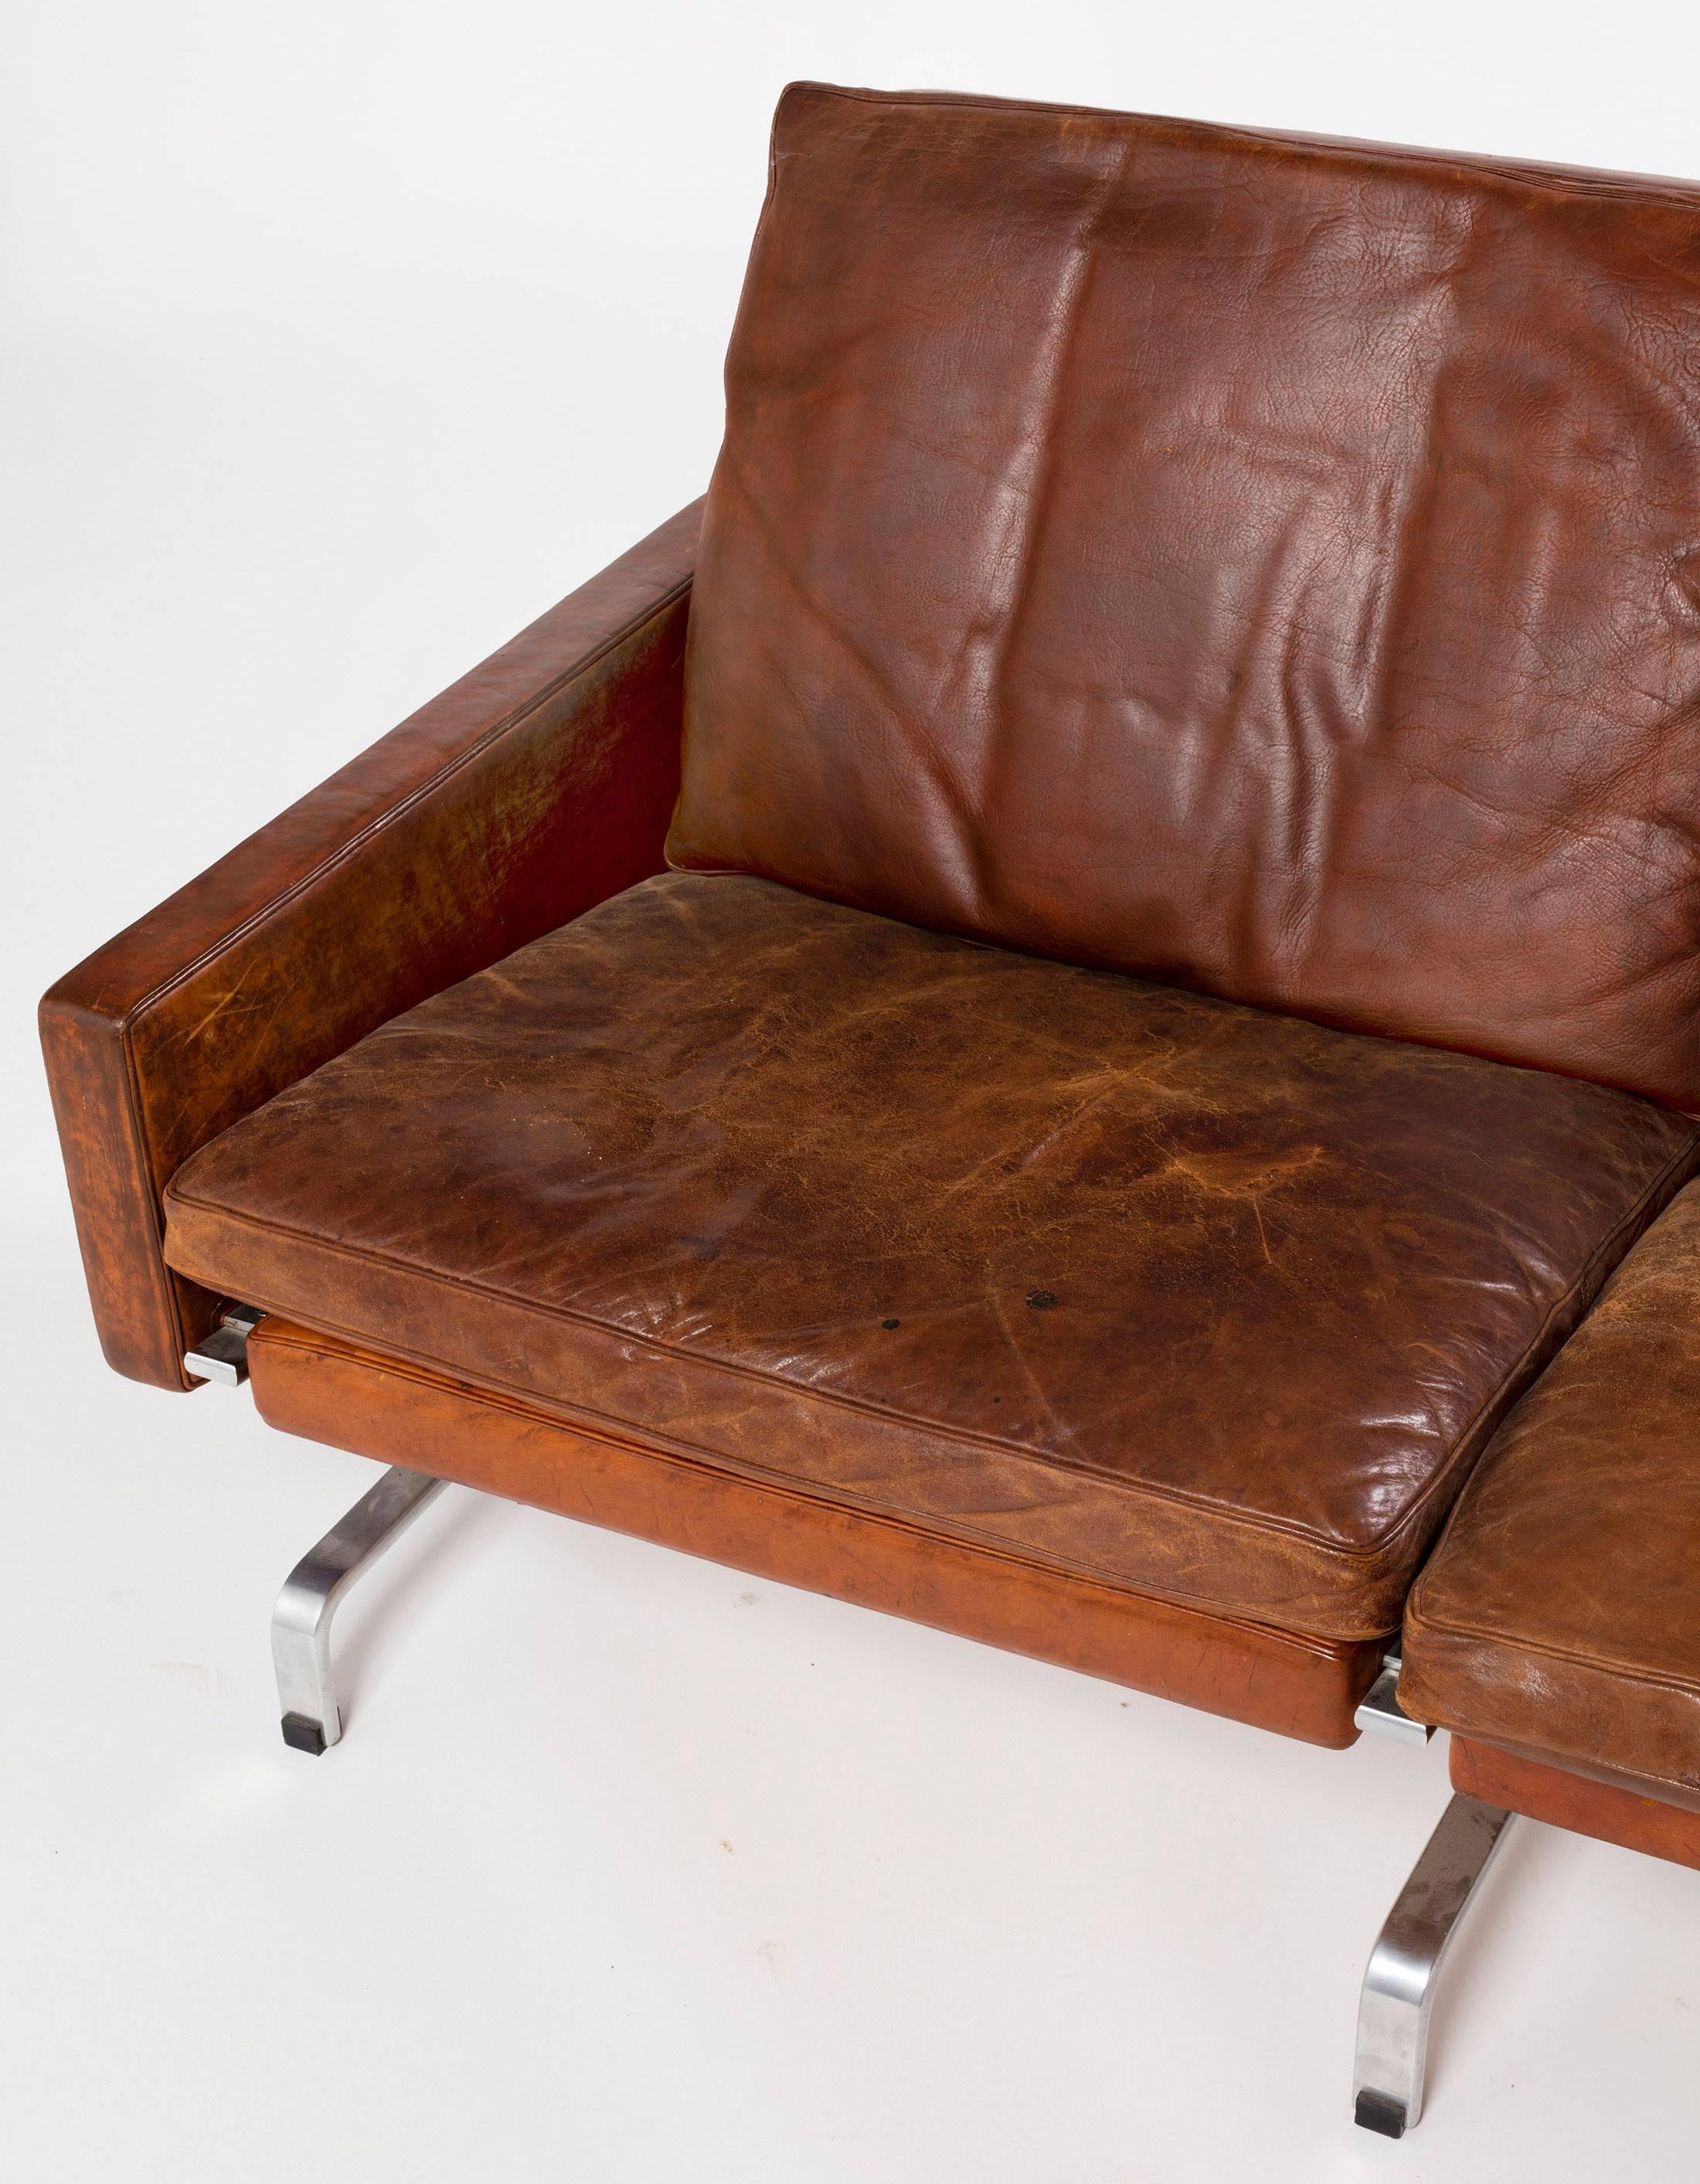 Scandinavian Modern Poul Kjaerholm First Series PK31/2 Sofa for Kold Christensen in Brown Leather